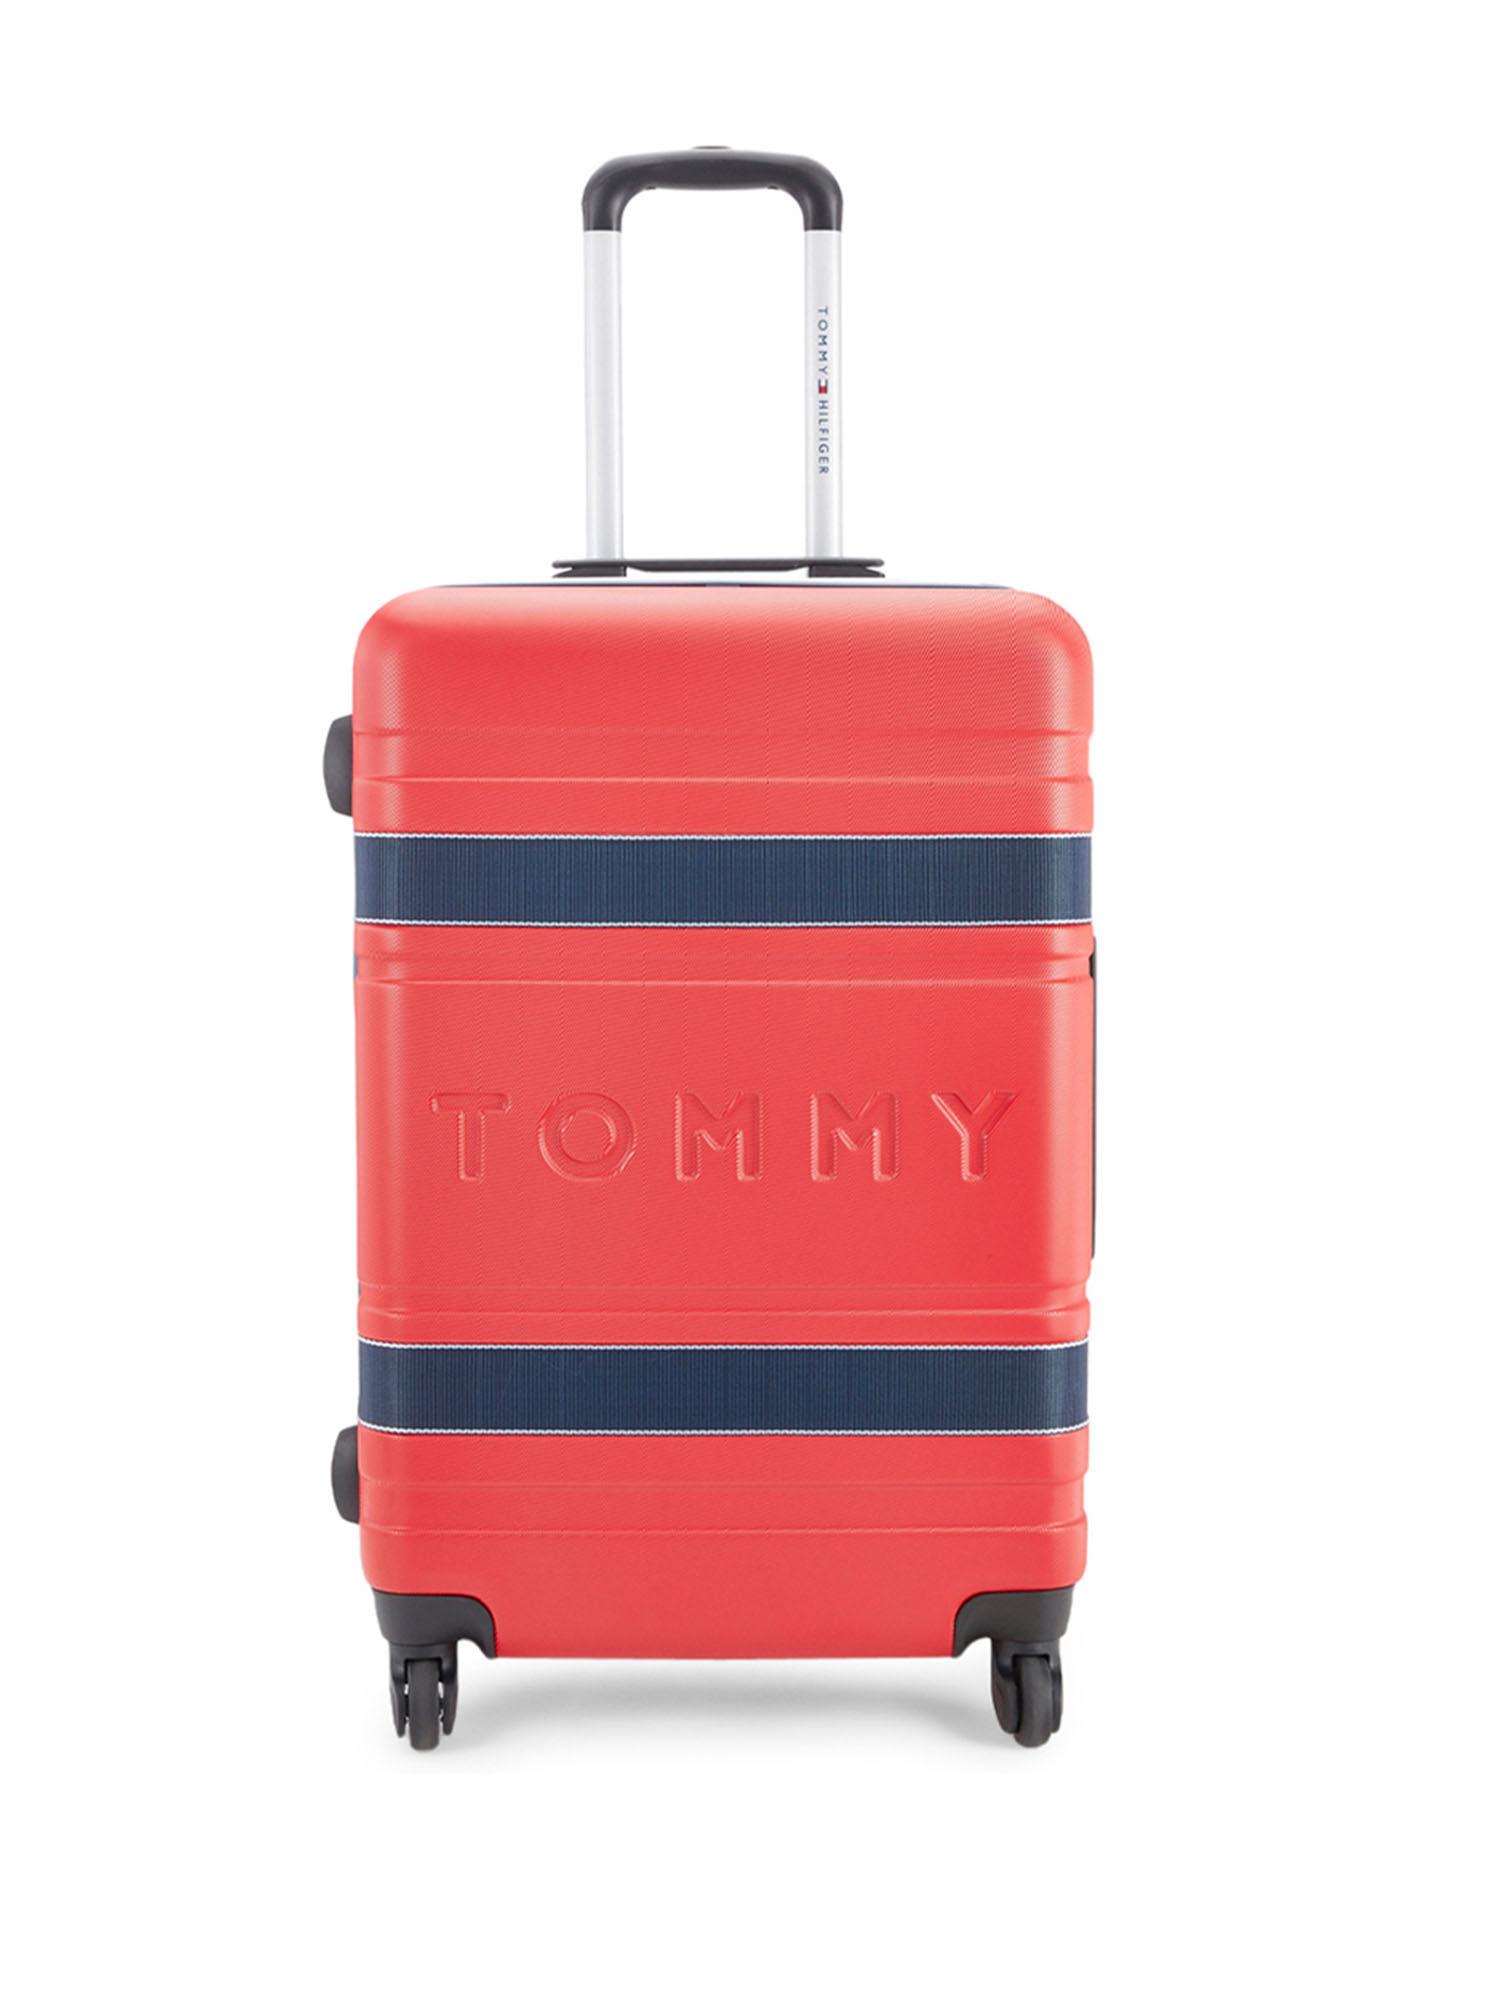 las vegas textured hard luggage trolley red navy cargo